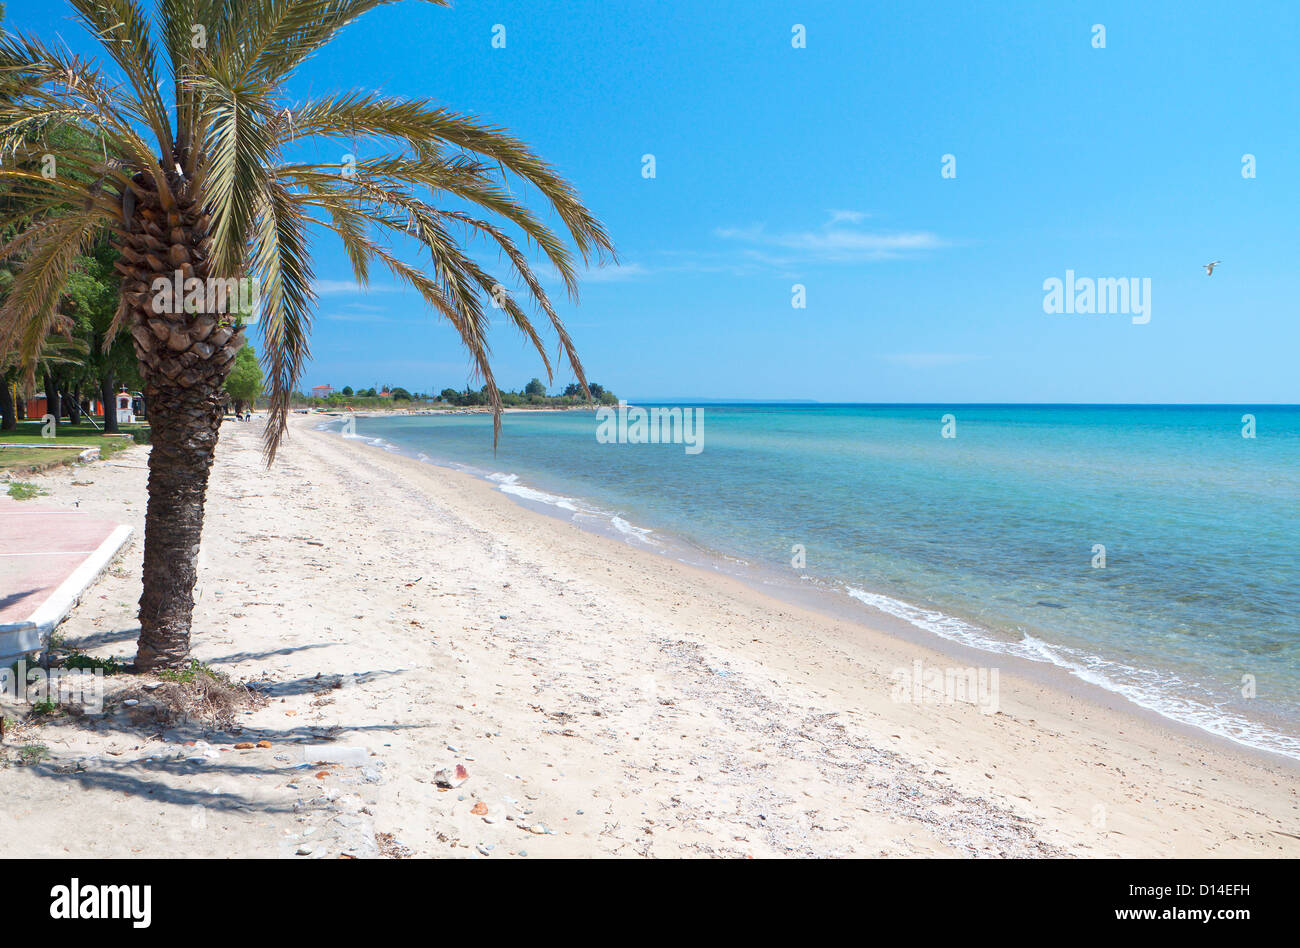 Scenic beach at Halkidiki peninsula in Greece Stock Photo